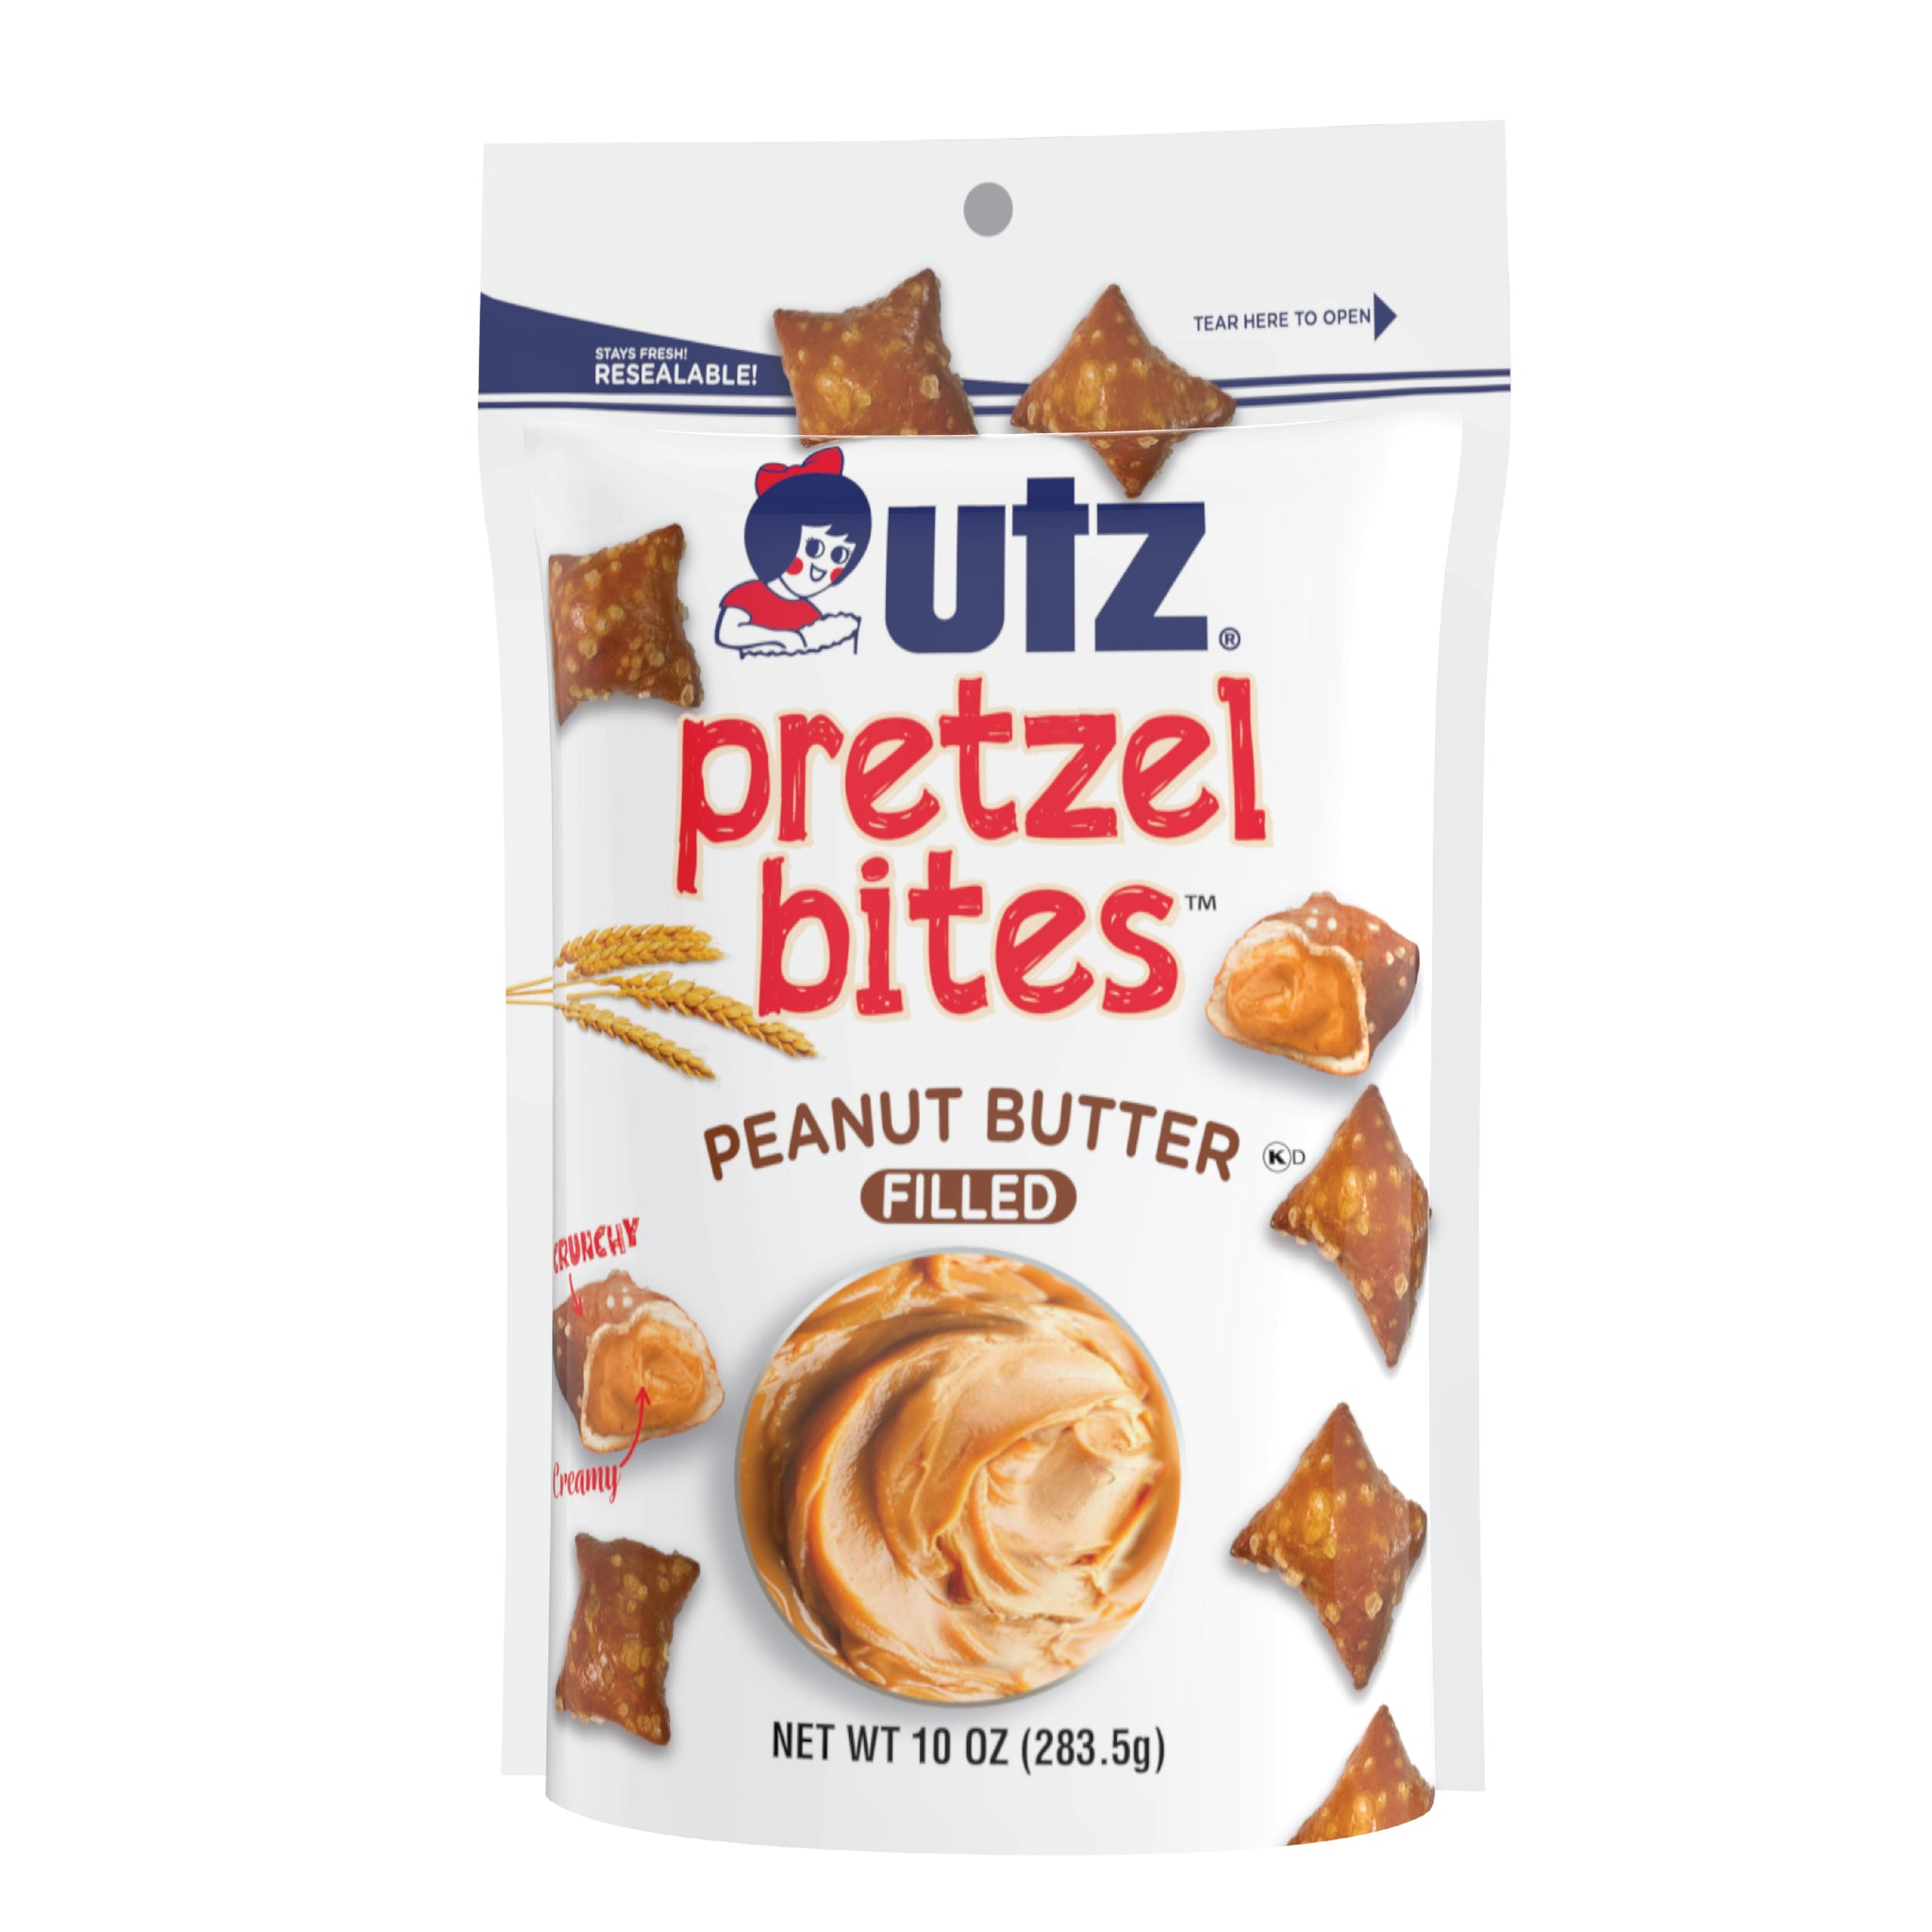 Utz Peanut Butter filled Pretzel Bites